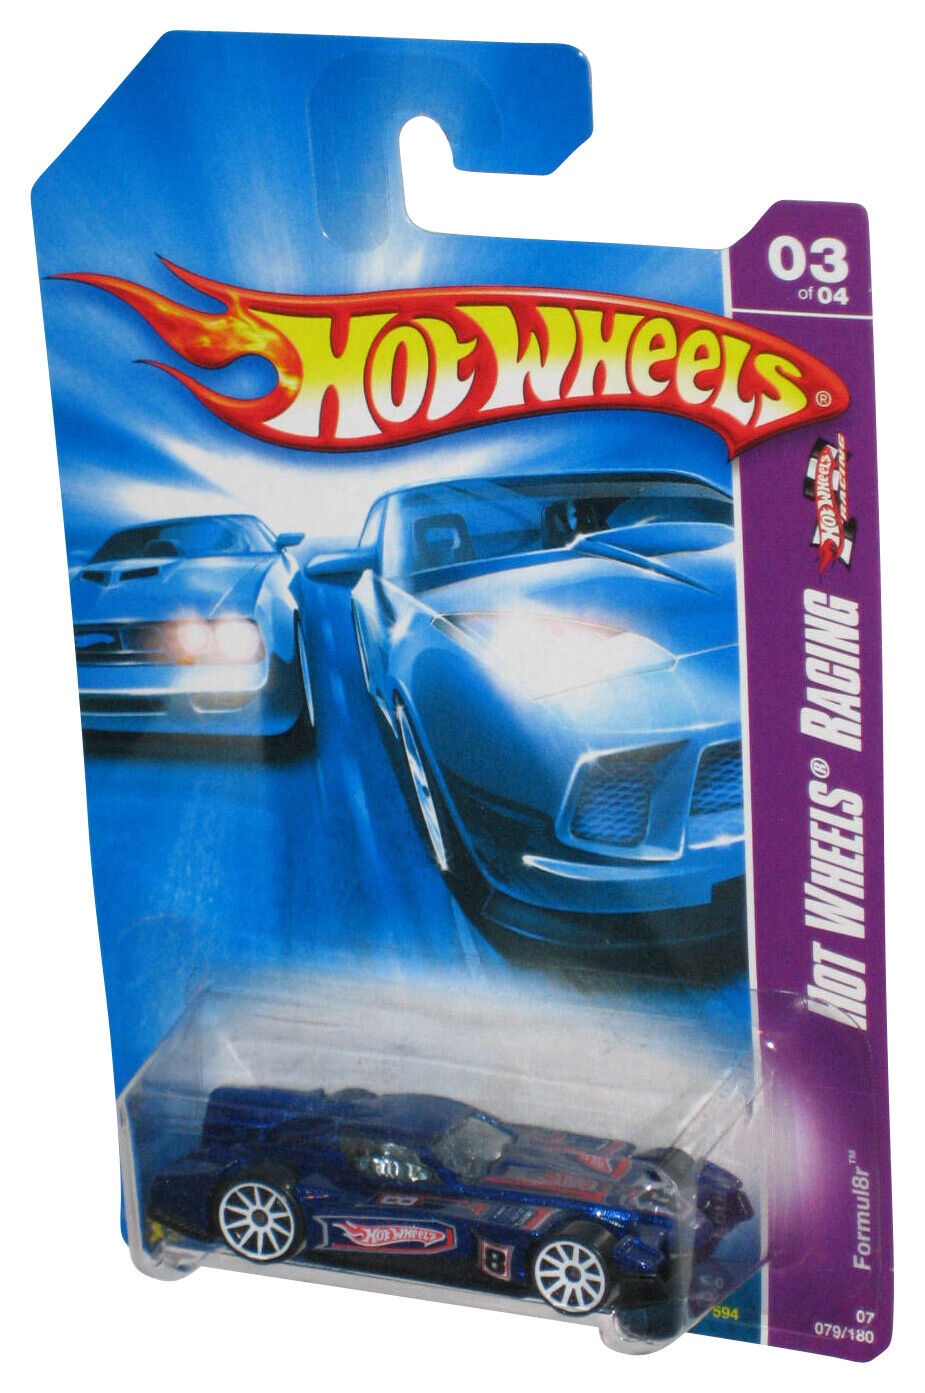 Hot Wheels Racing 03/04 (2006) Blue Formul8r Car 079/180